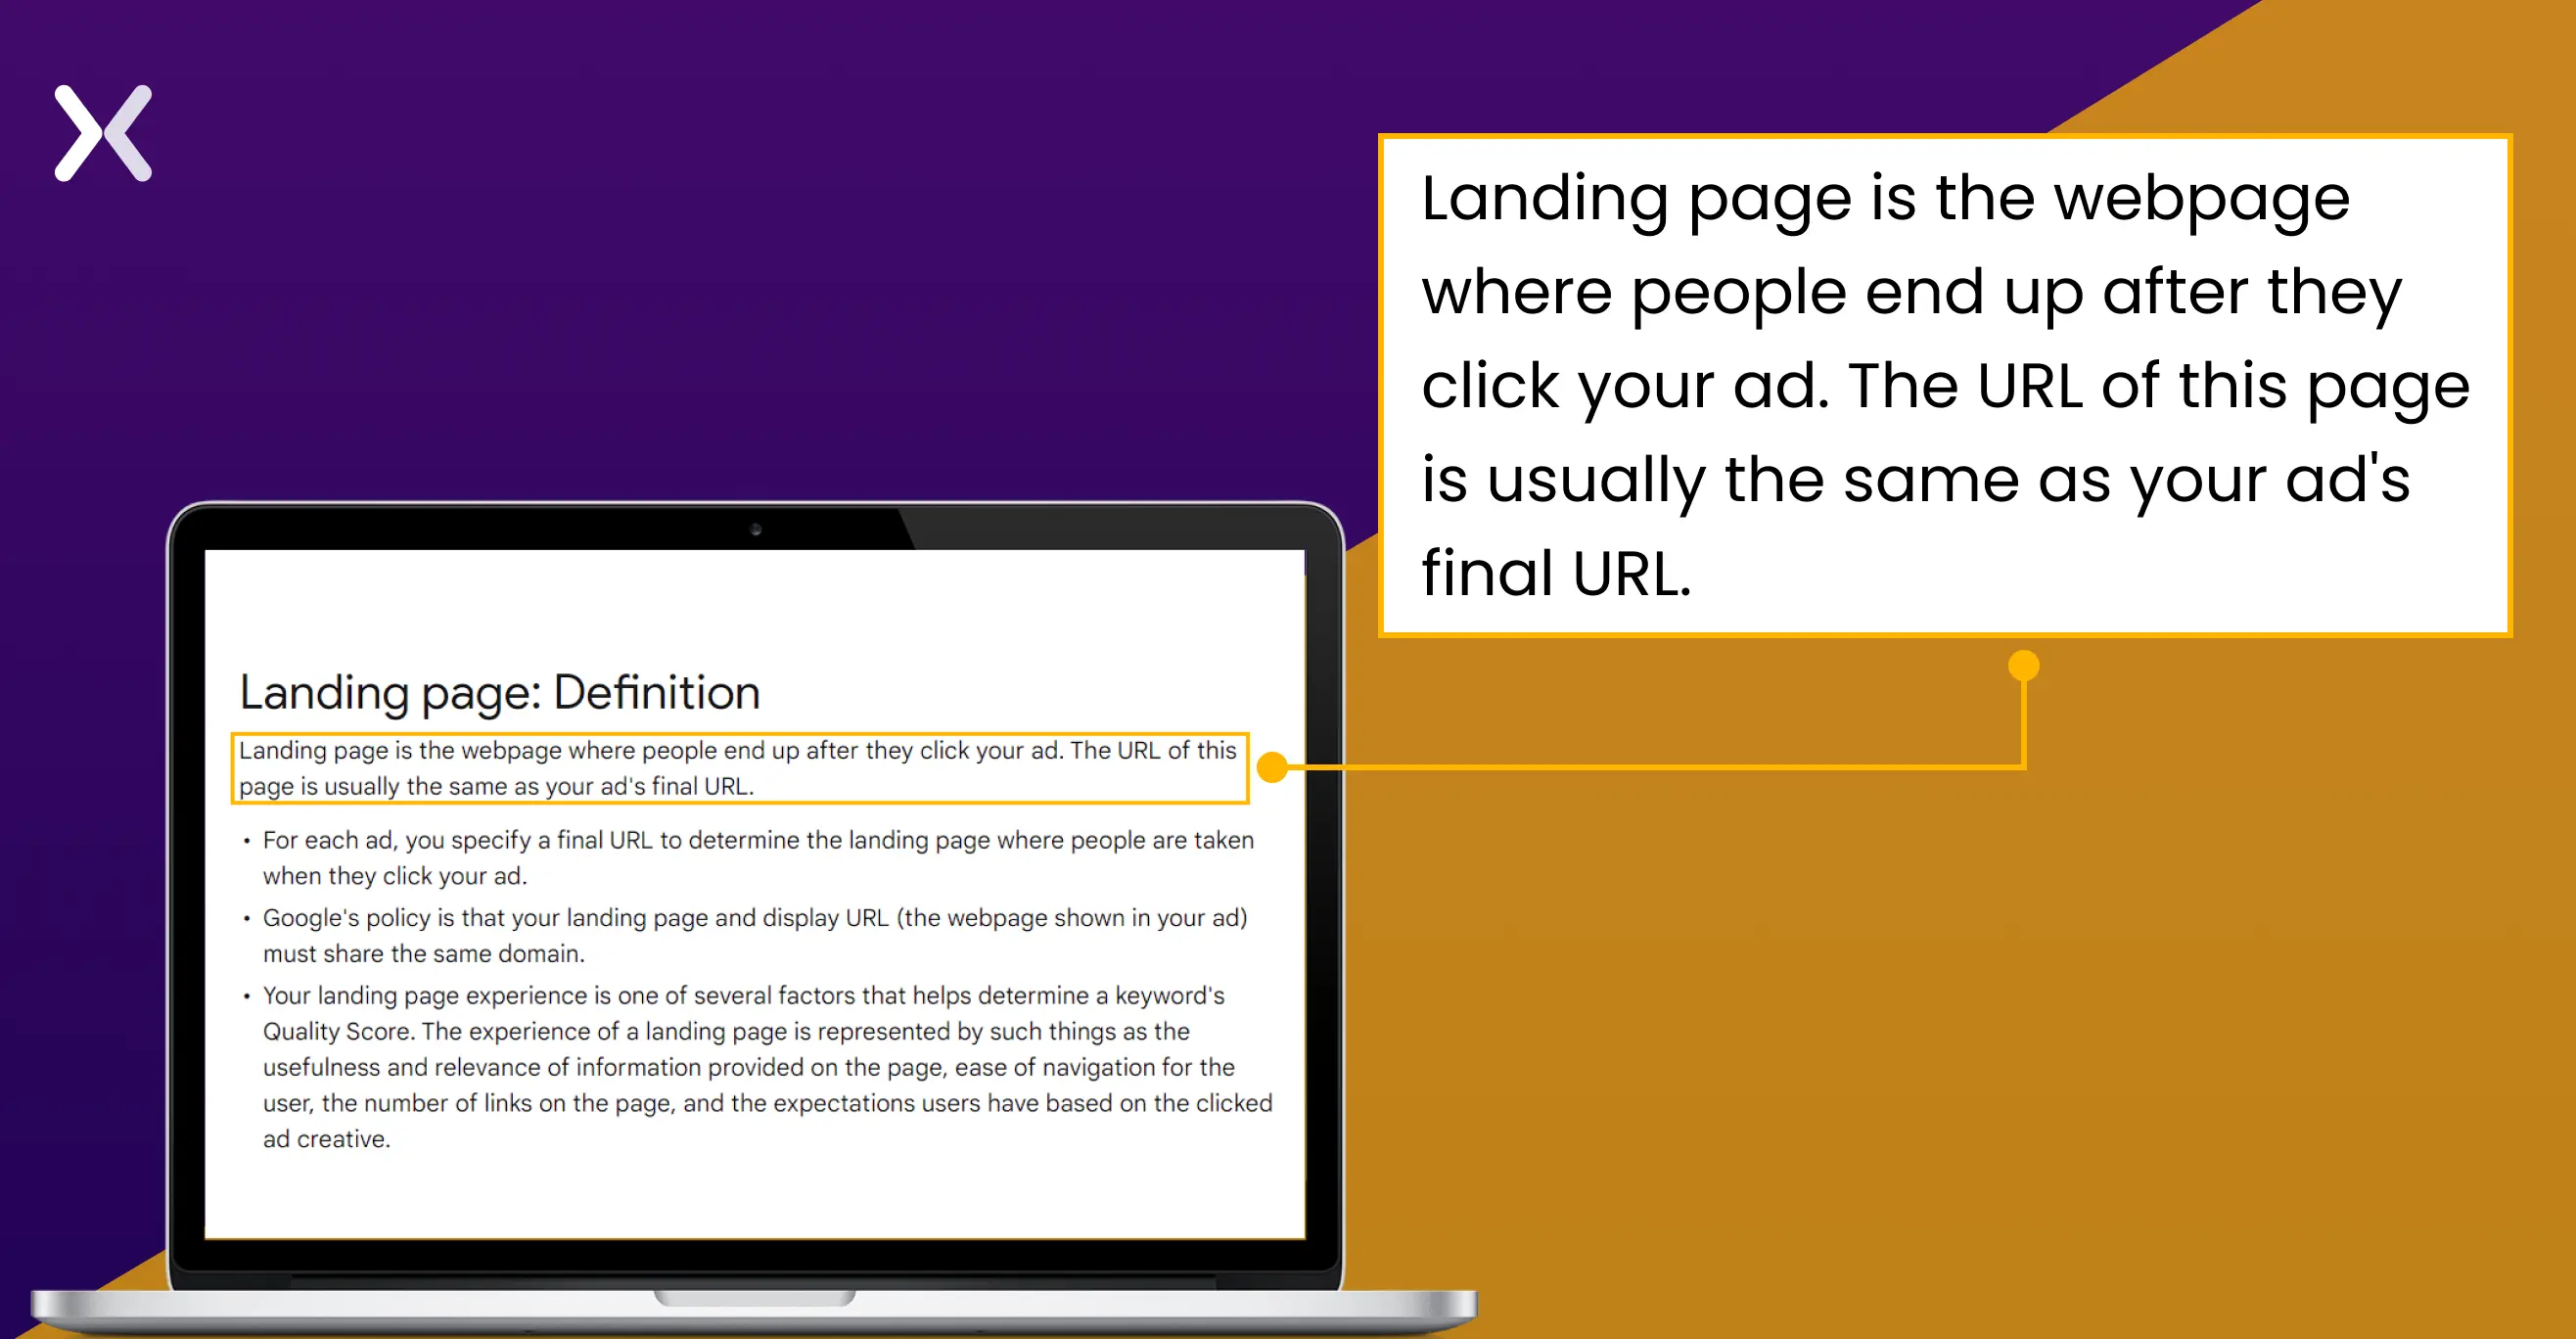 post-click-landing-page-Google-definition.webp